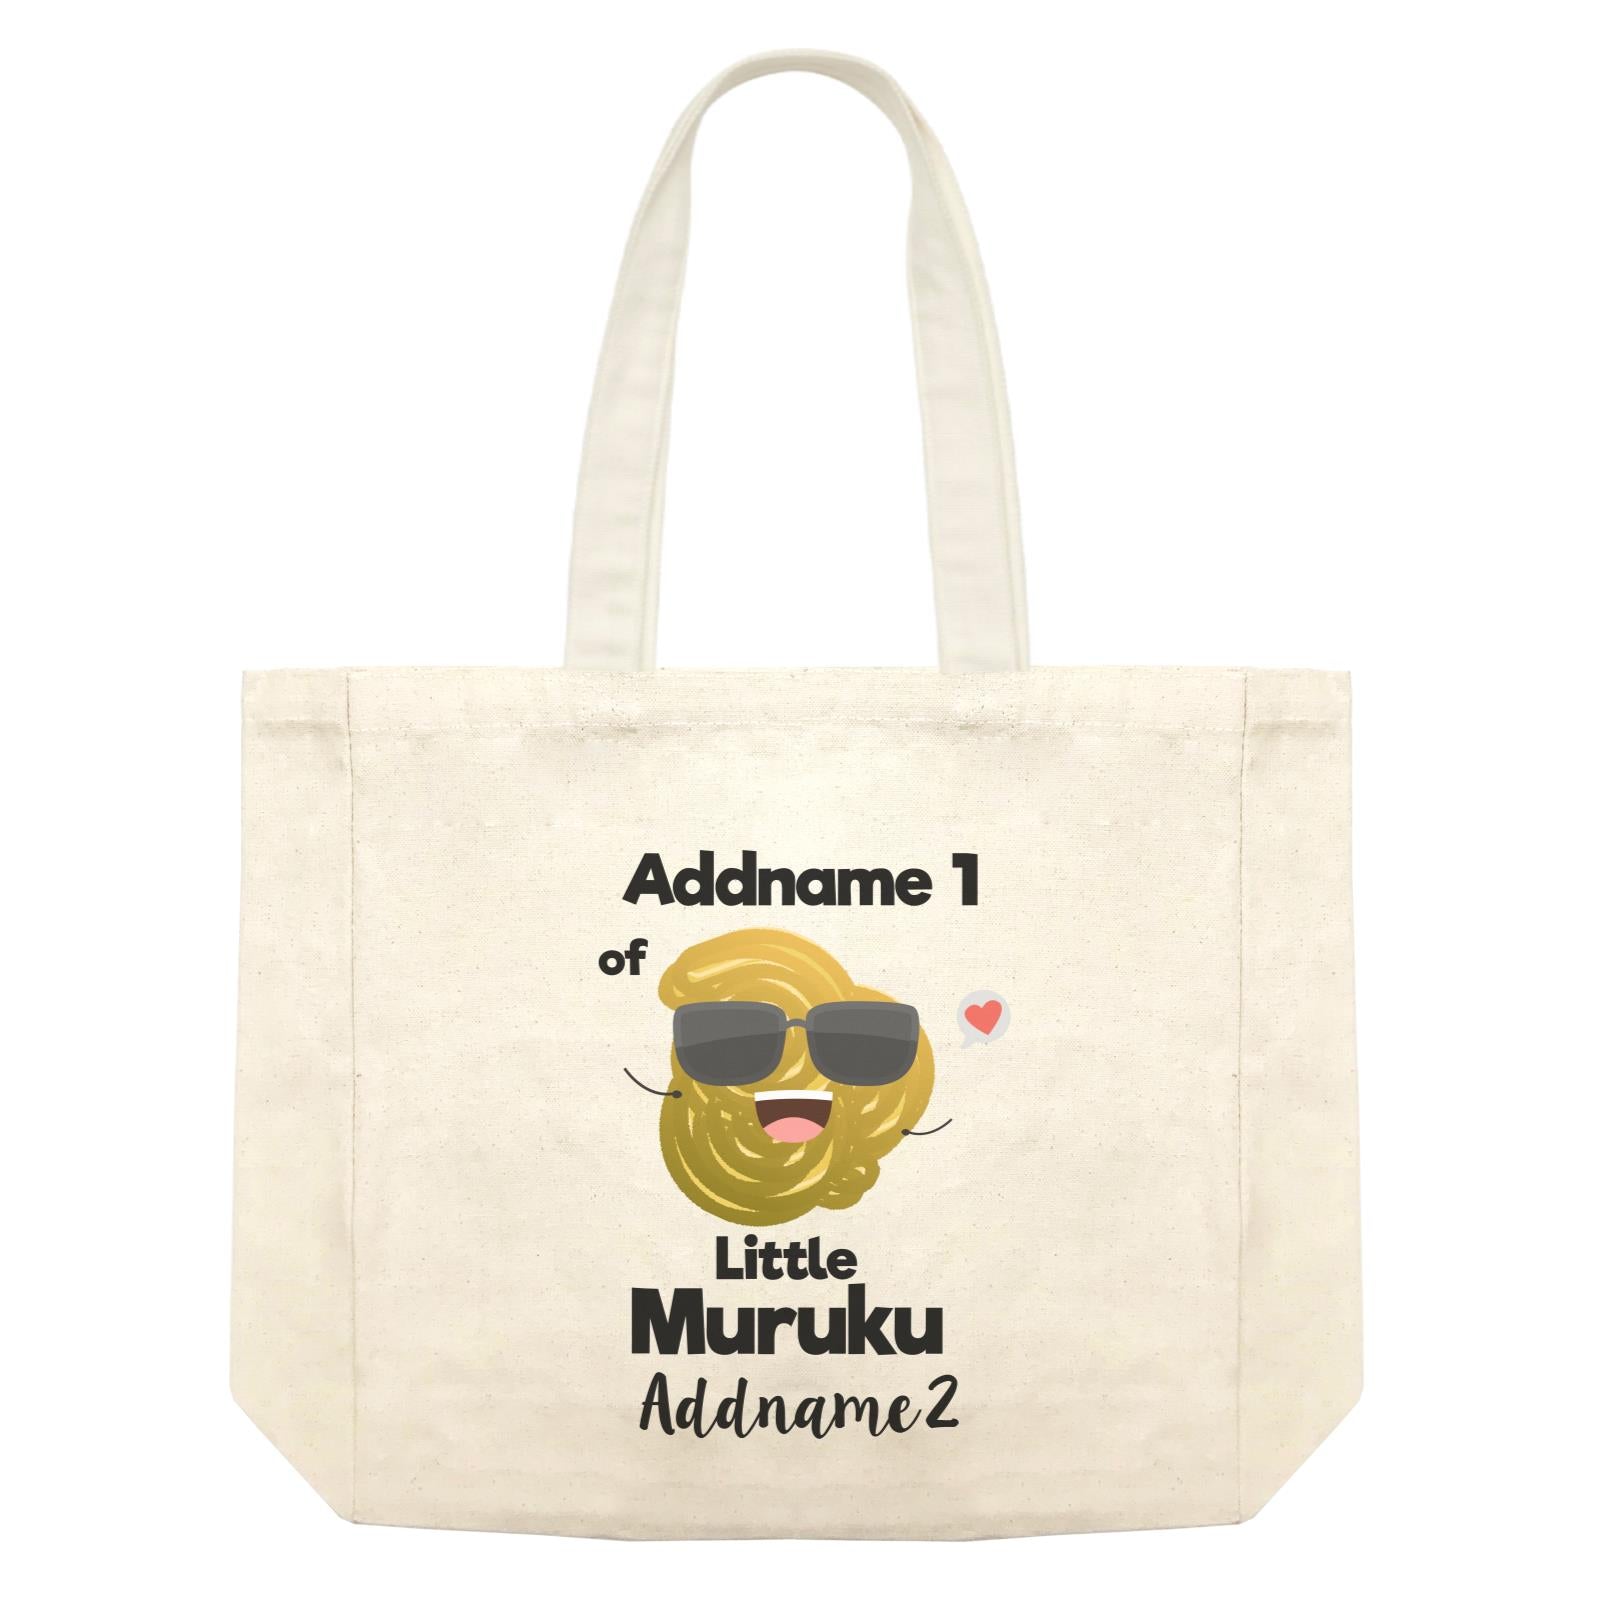 Addname 1 of Little Muruku Addname 2 Shopping Bag